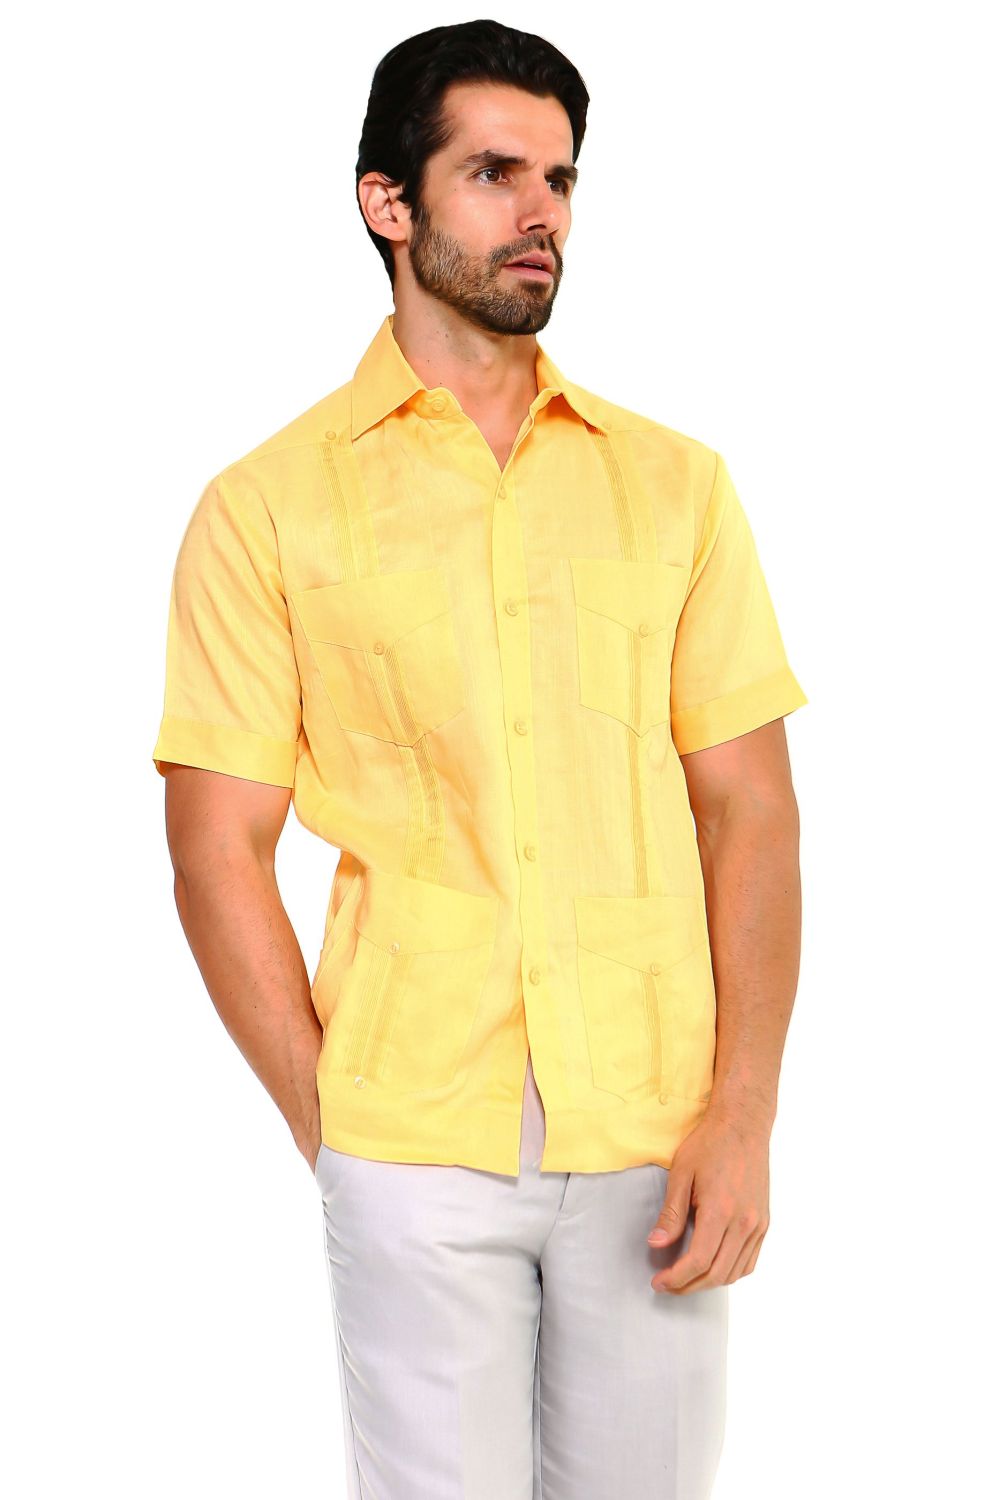 Mojito Collection Men's Traditional Guayabera Shirt Premium 100% Linen Short Sleeve  4 Pocket  Design - Mojito Collection - Guayabera, Mens Shirt, Mojito Guayabera Shirt, Short Sleeve Linen S